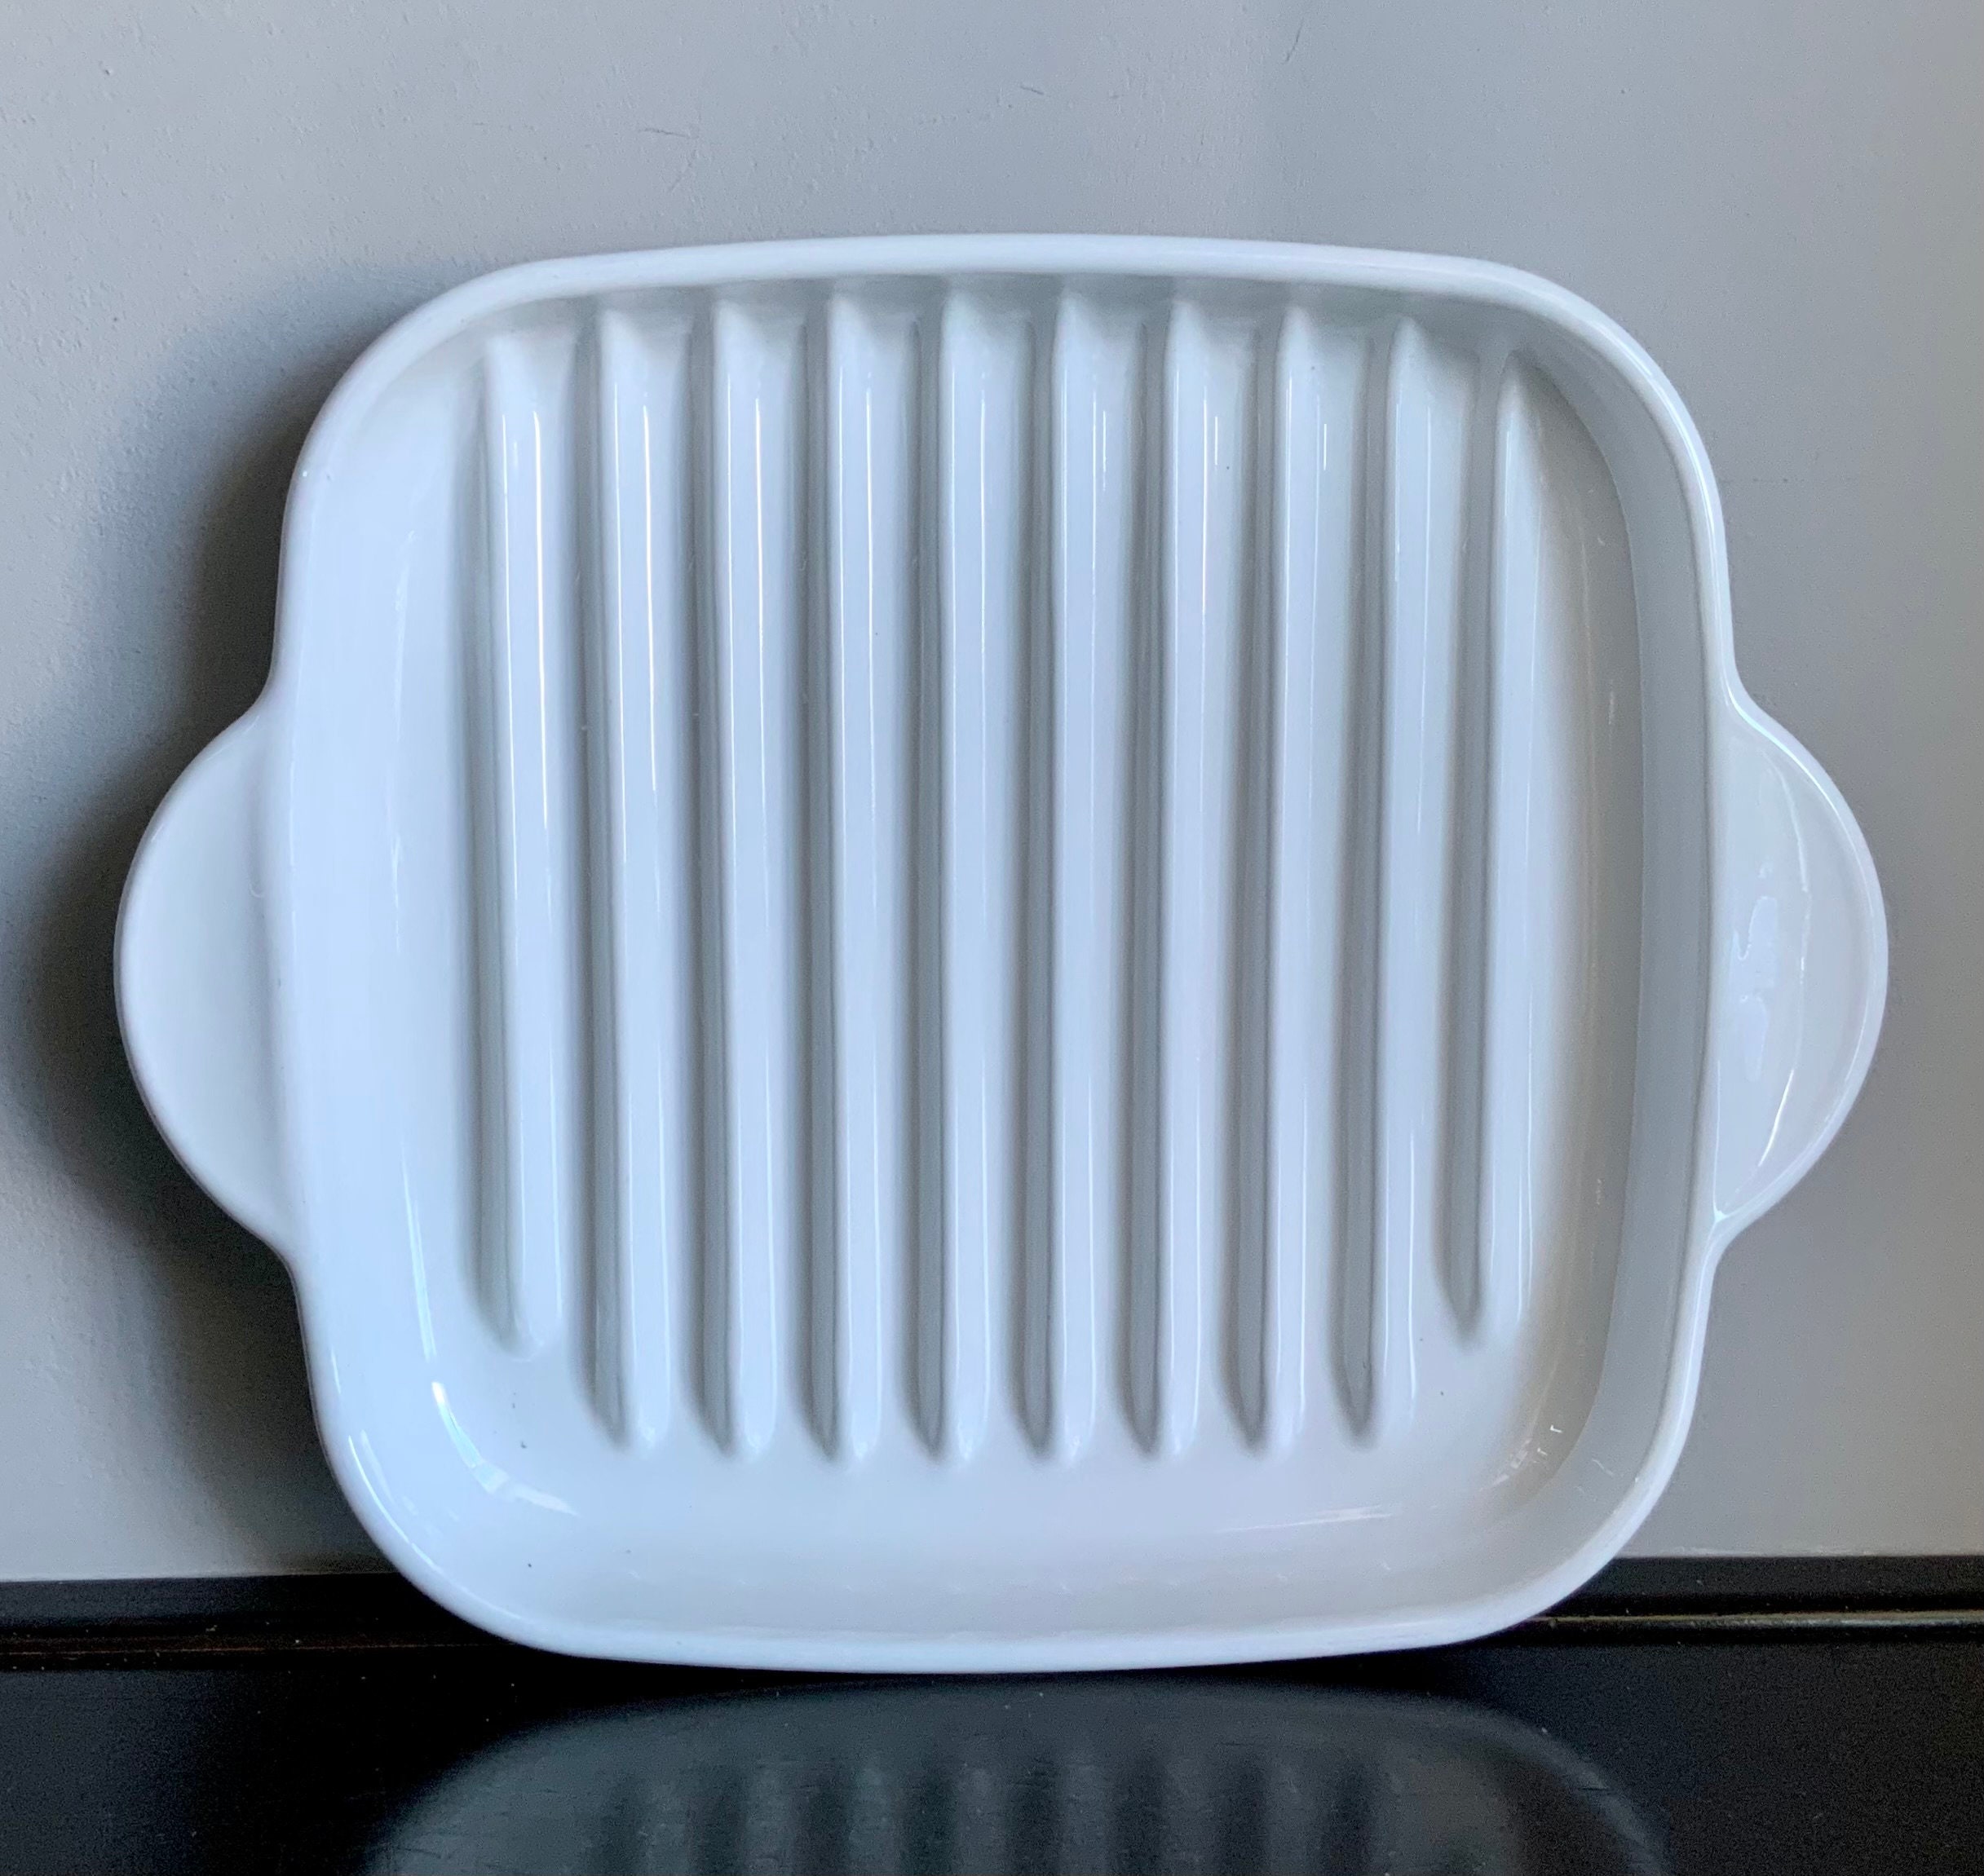 Teebee's Clear Like Glass Splatter-proof Heat Resistant Microwave